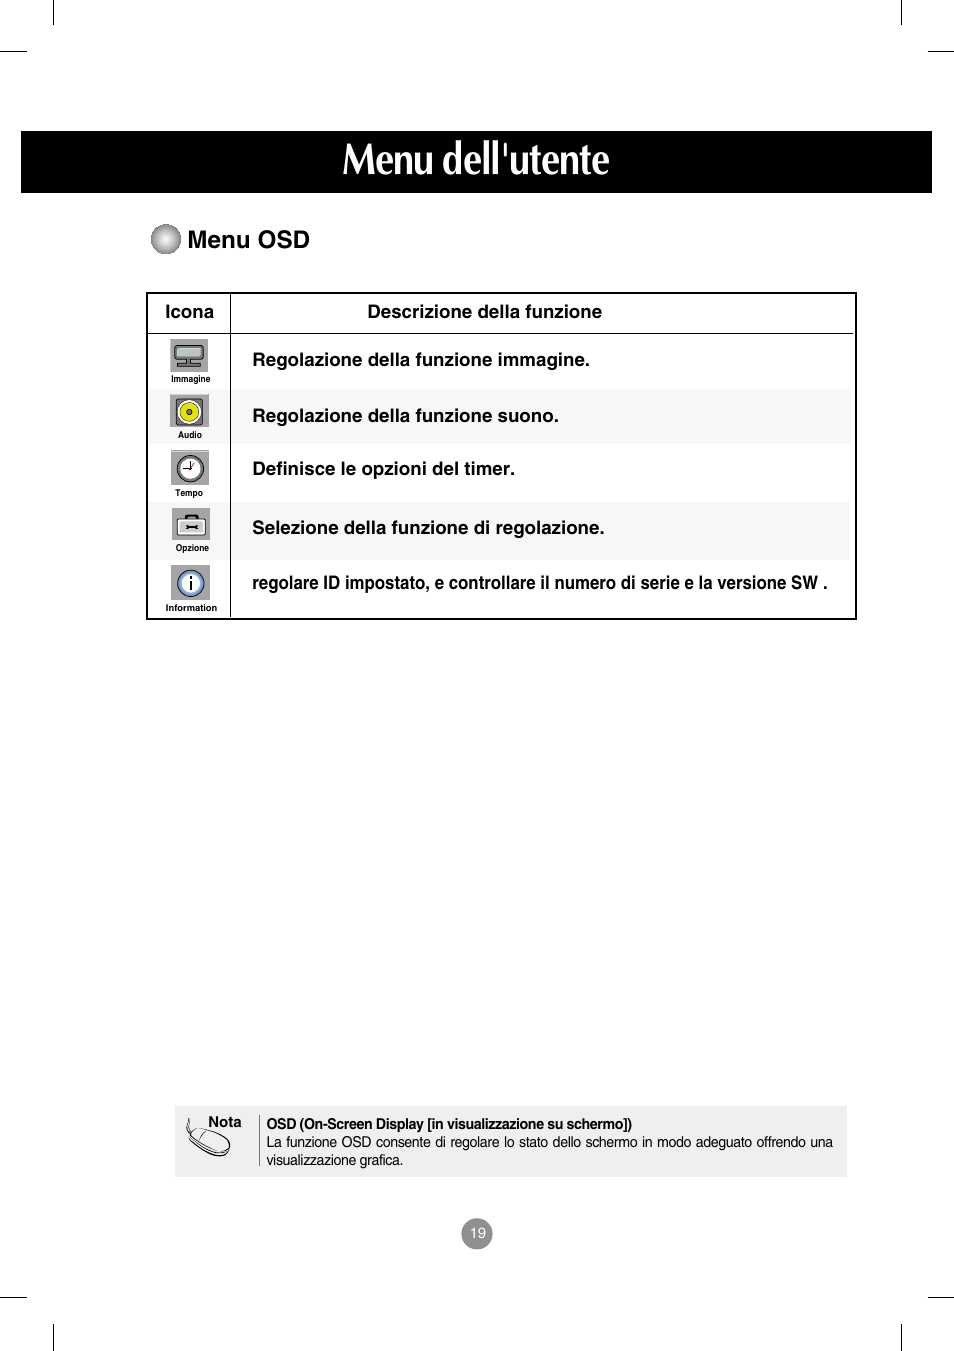 Menu osd, Menu dell'utente | LG M3702C-BA Manuale d'uso | Pagina 20 / 67